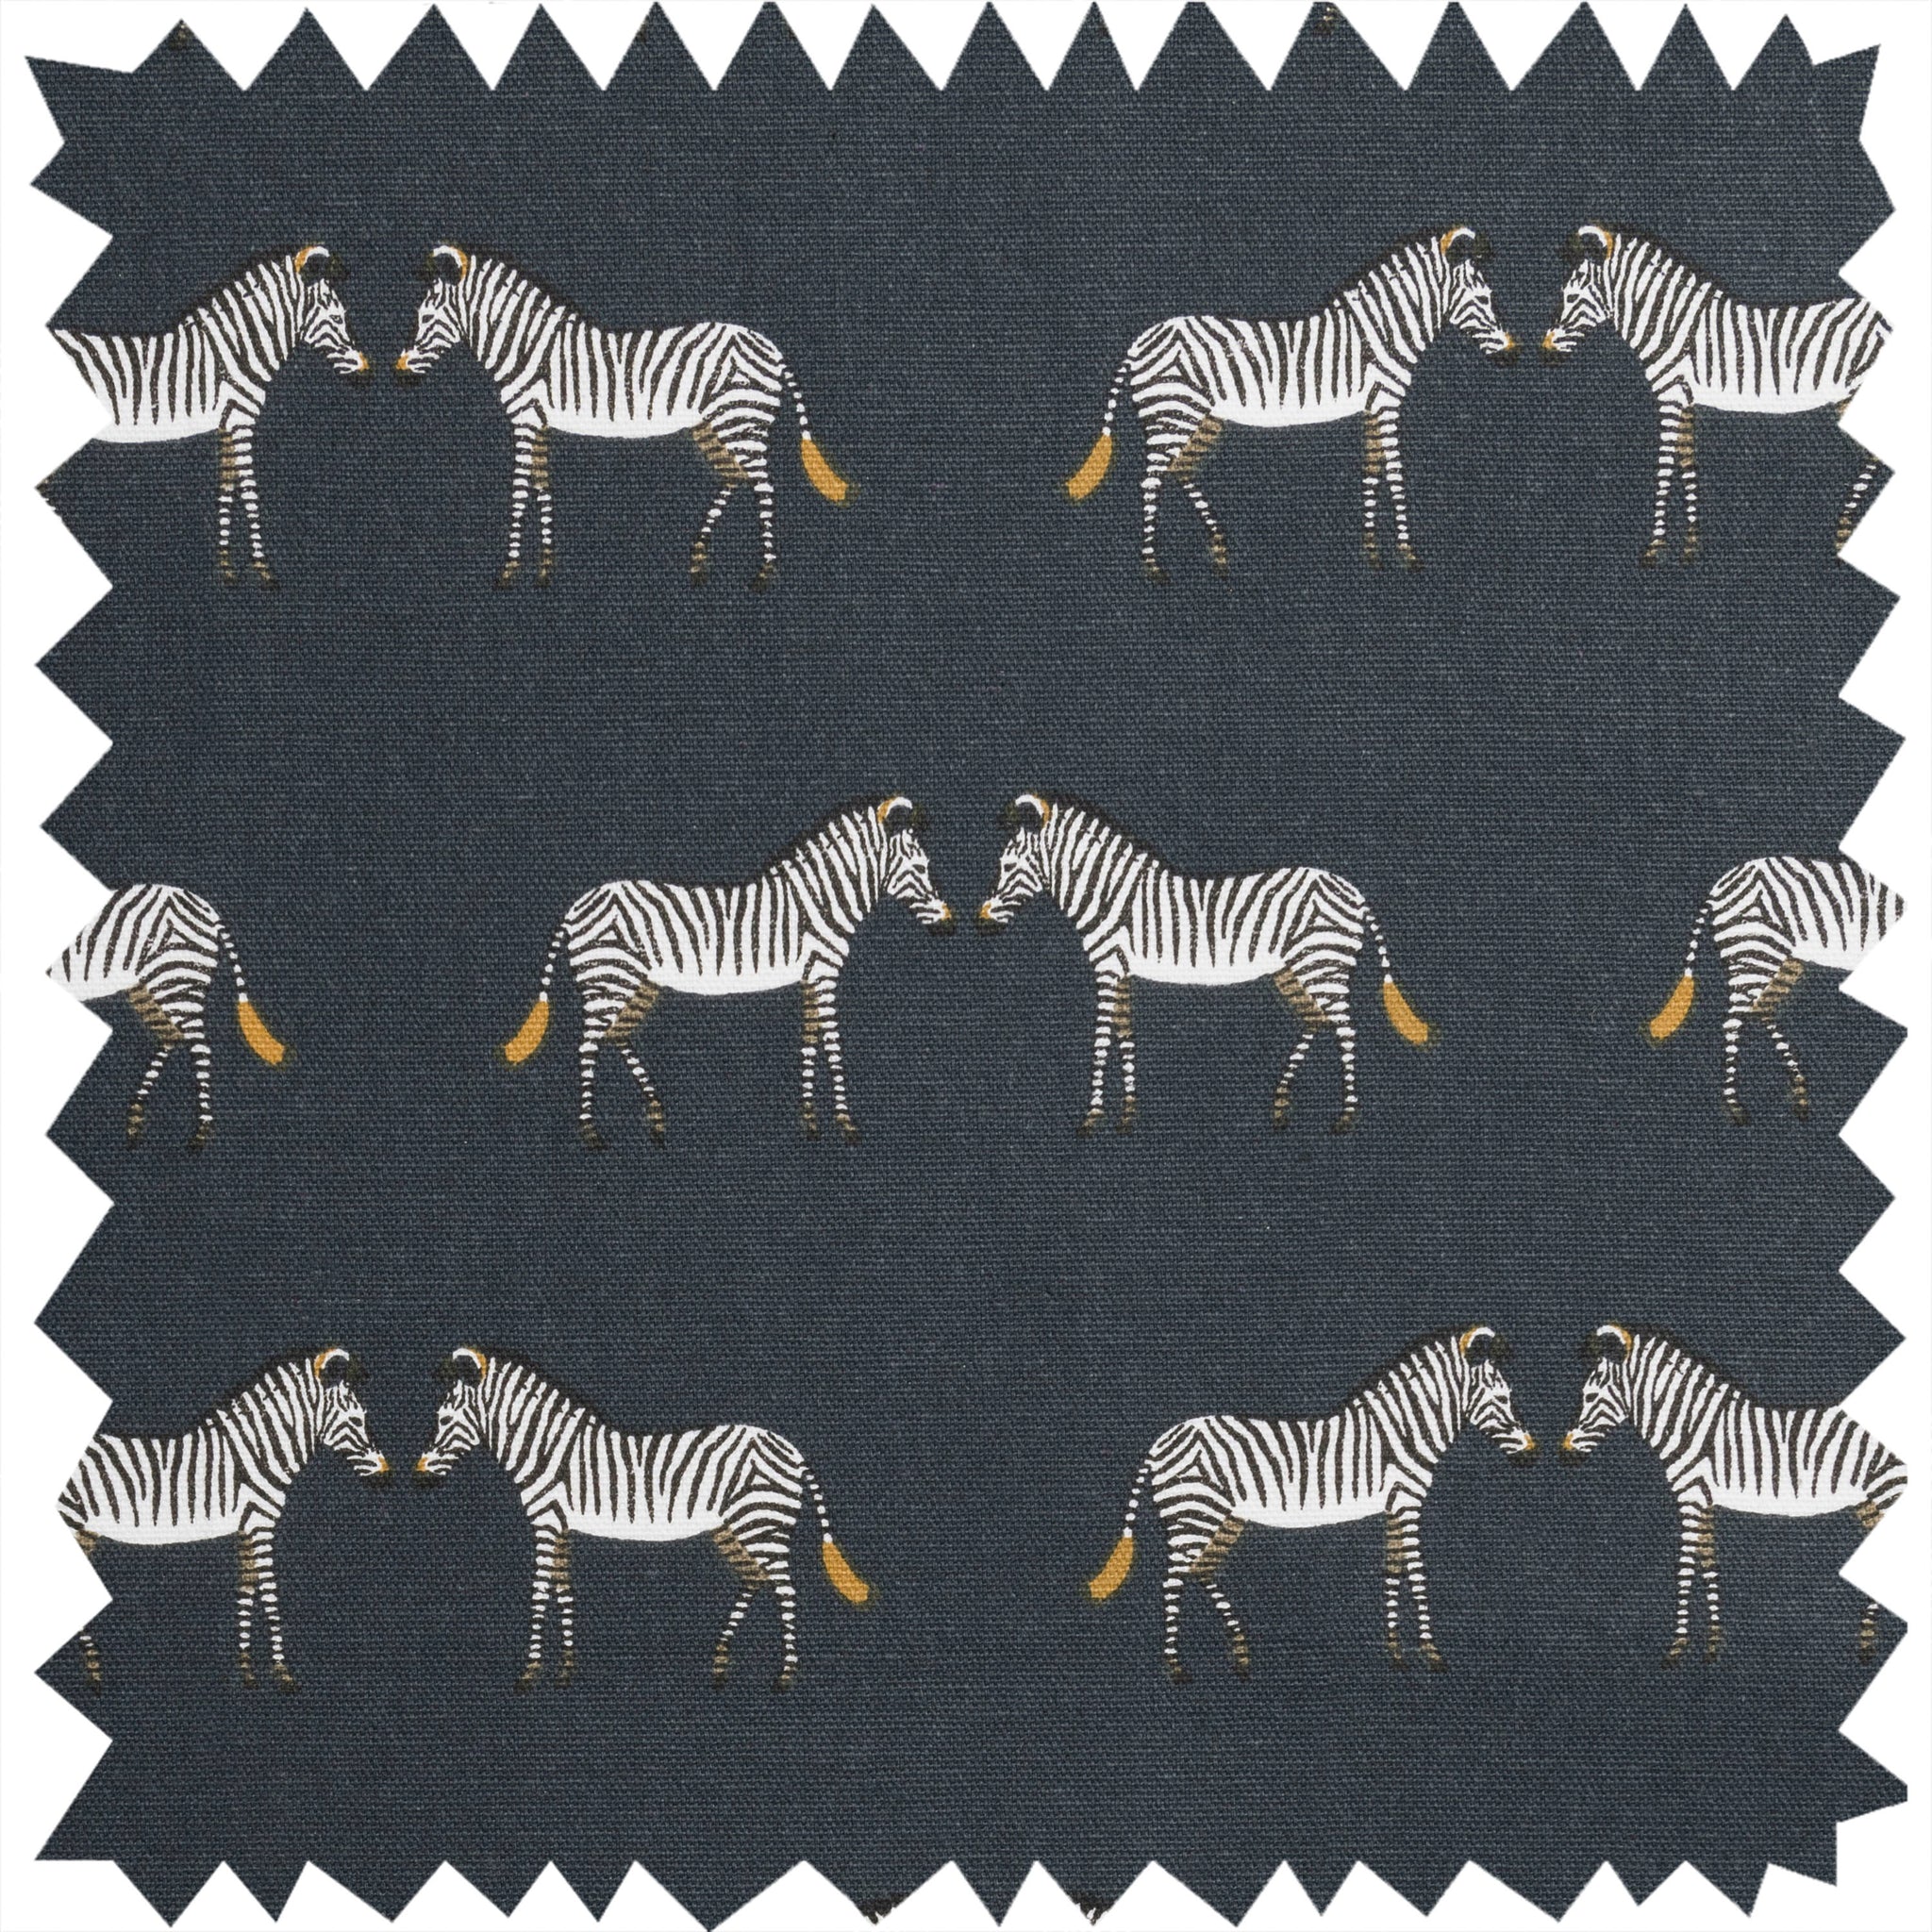 Zebra Fabric by the Metre